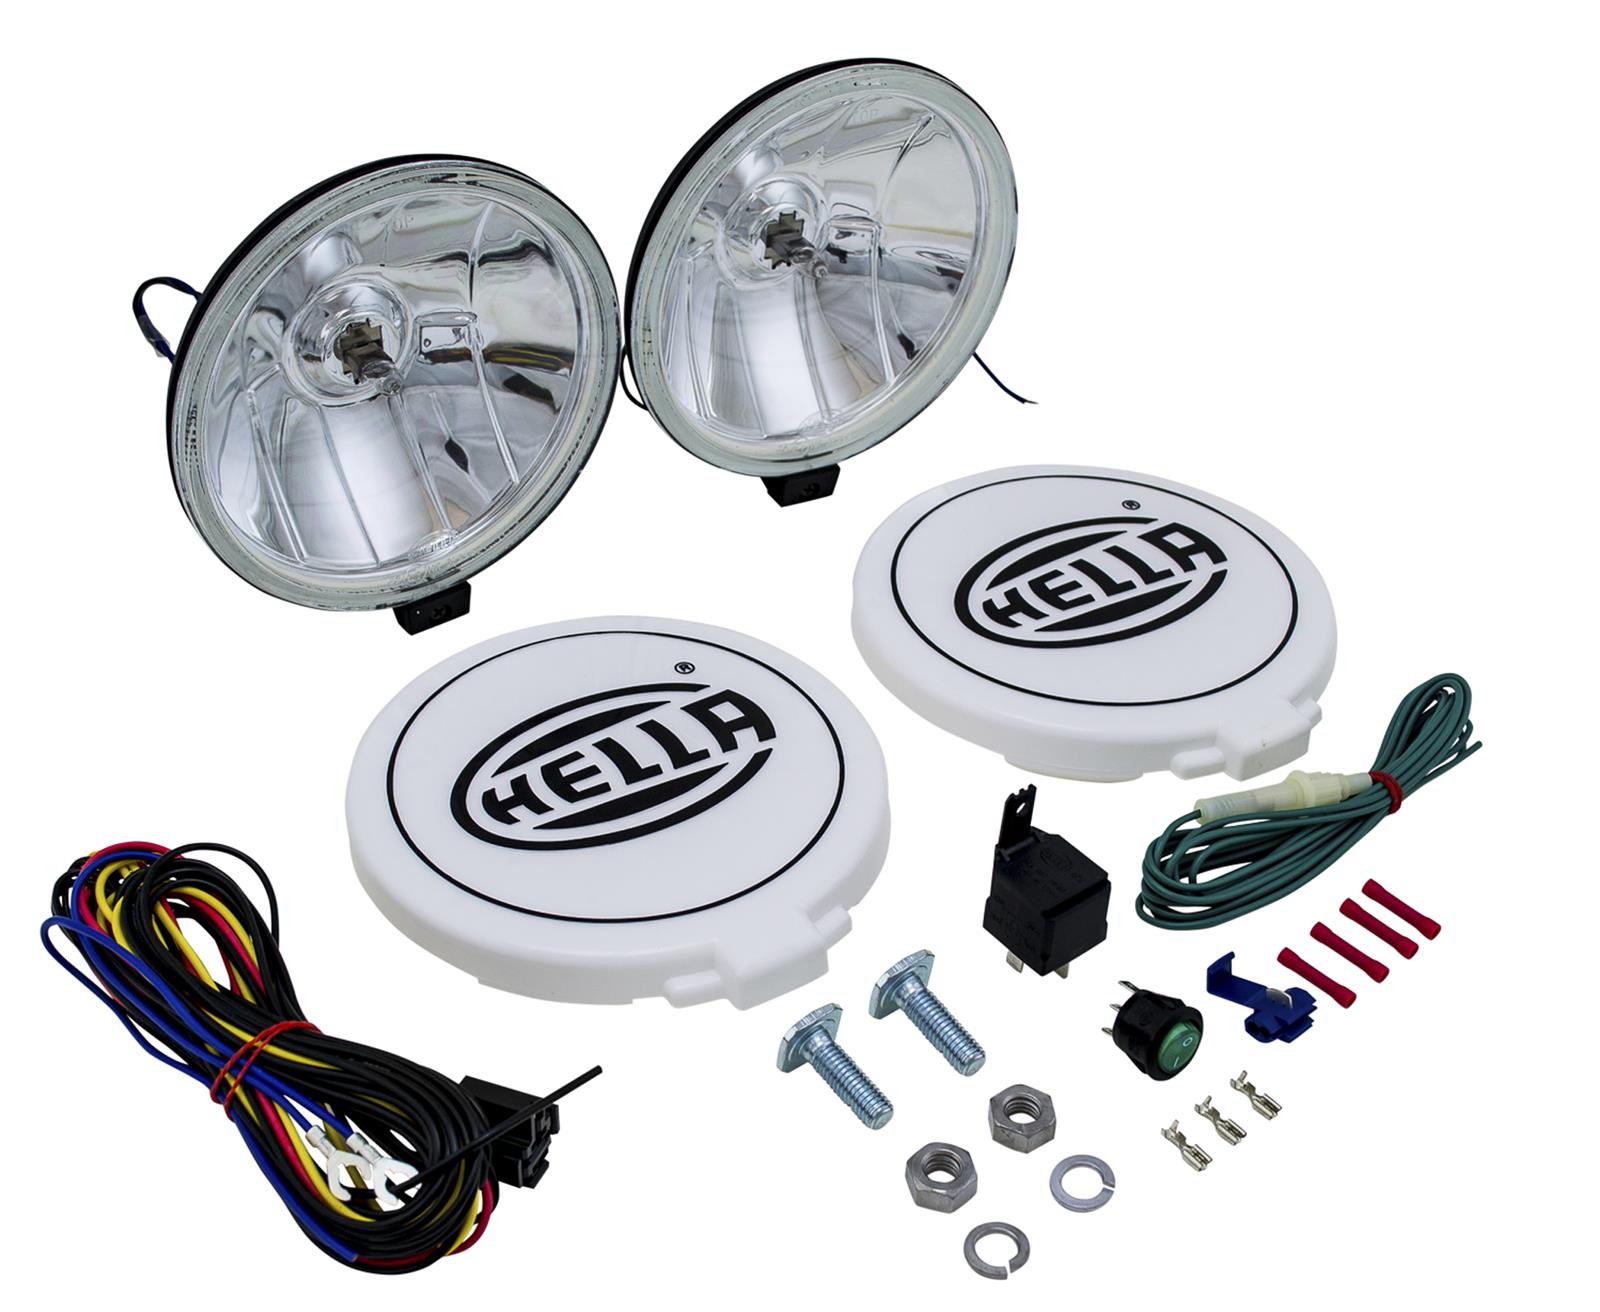 HELLA 005750941 500FF Series Driving Lamp Kit 